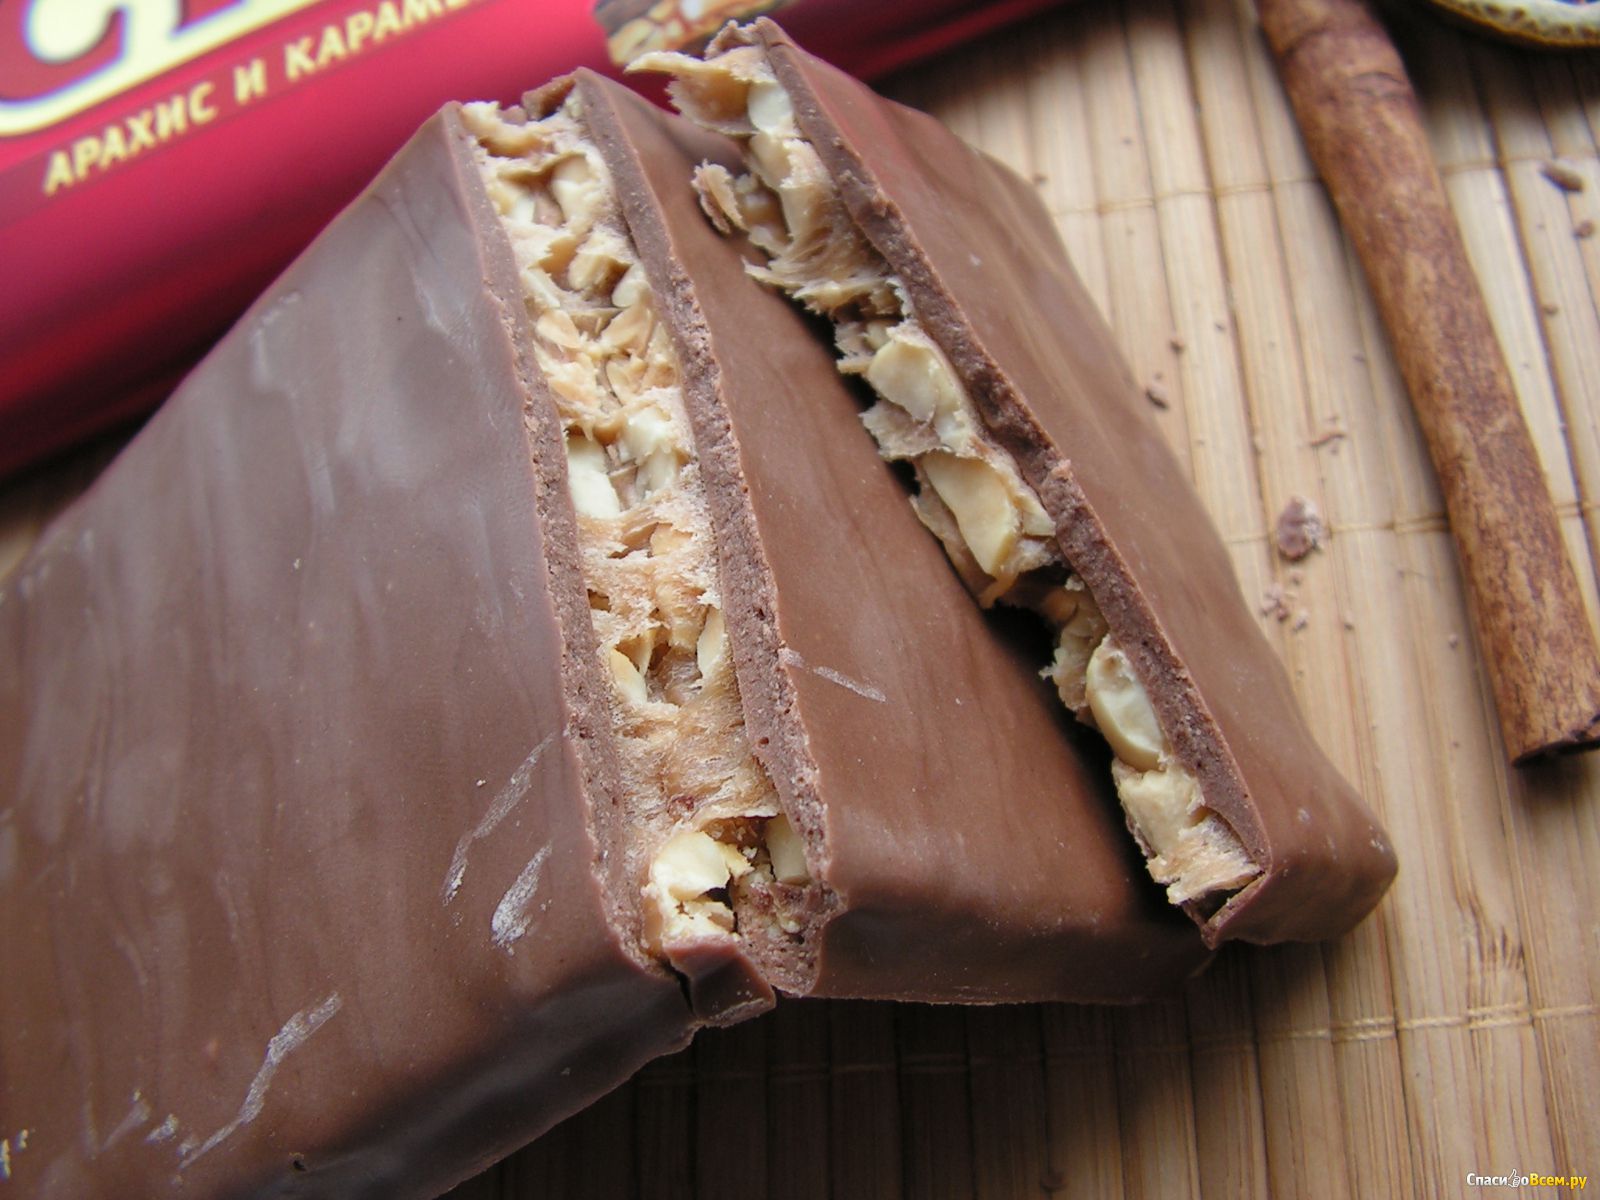 Шоколад арахис степ. Степ шоколад. Шоколадный батончик степ. Арахис в шоколаде степ. Шоколад с цельным арахисом.